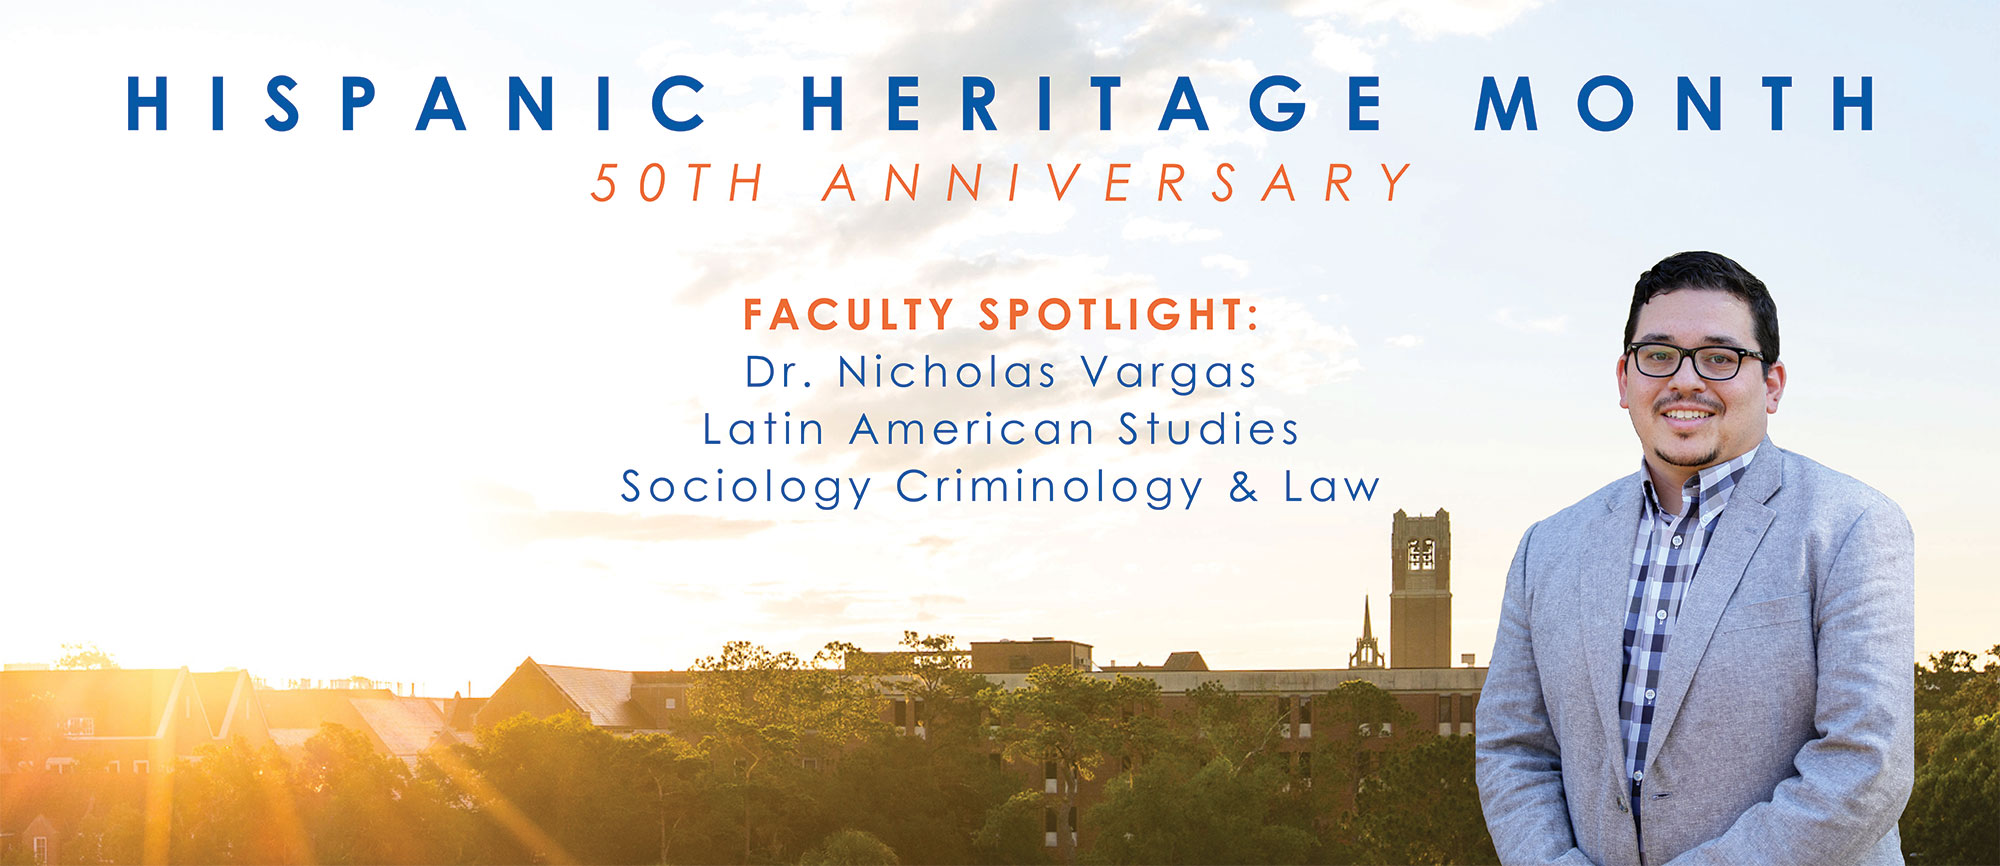 Hispanic Heritage Month Faculty Spotlight Dr. Nicholas Vargas